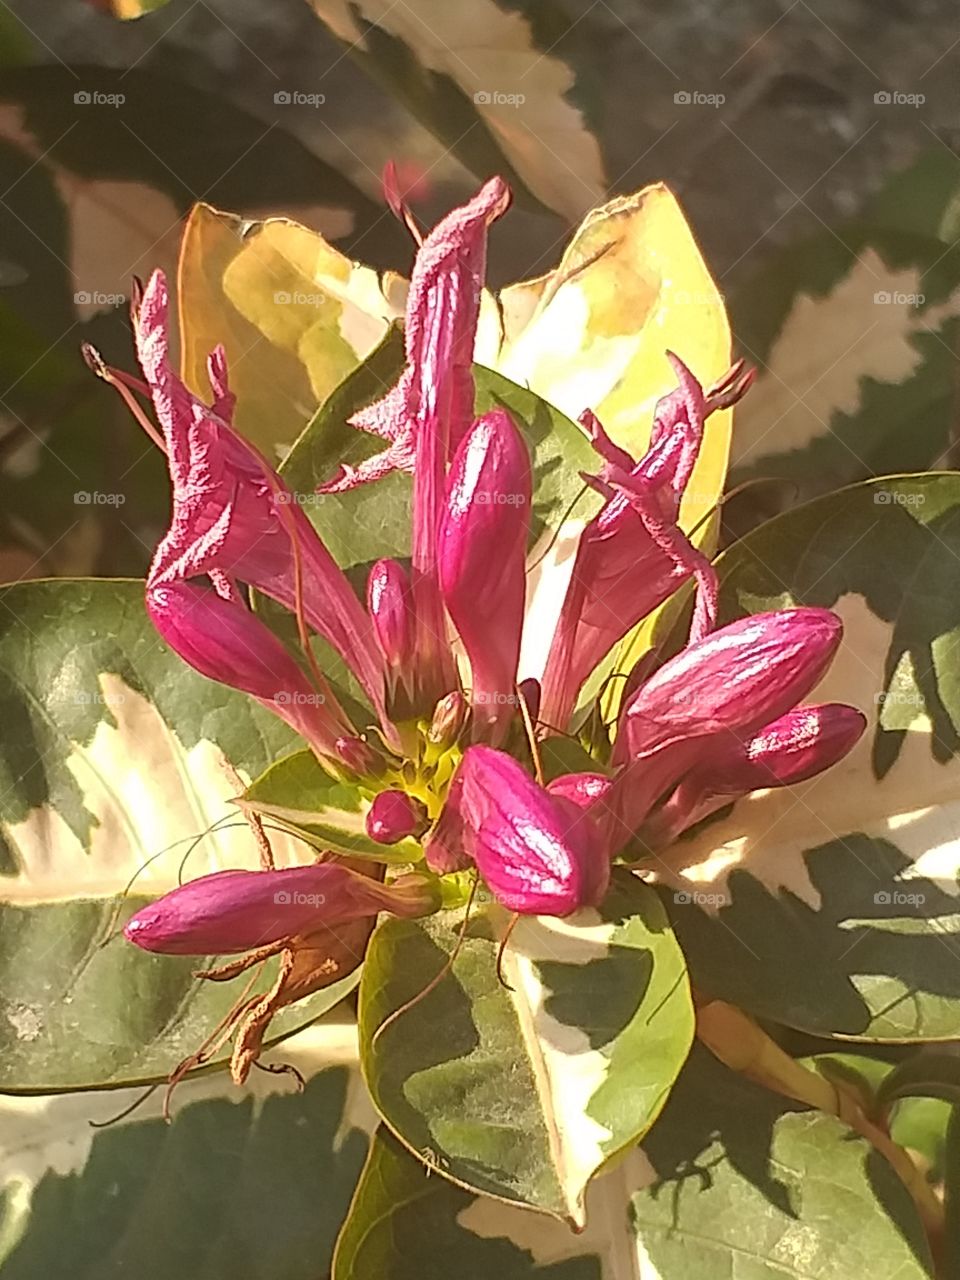 Vibrant flora